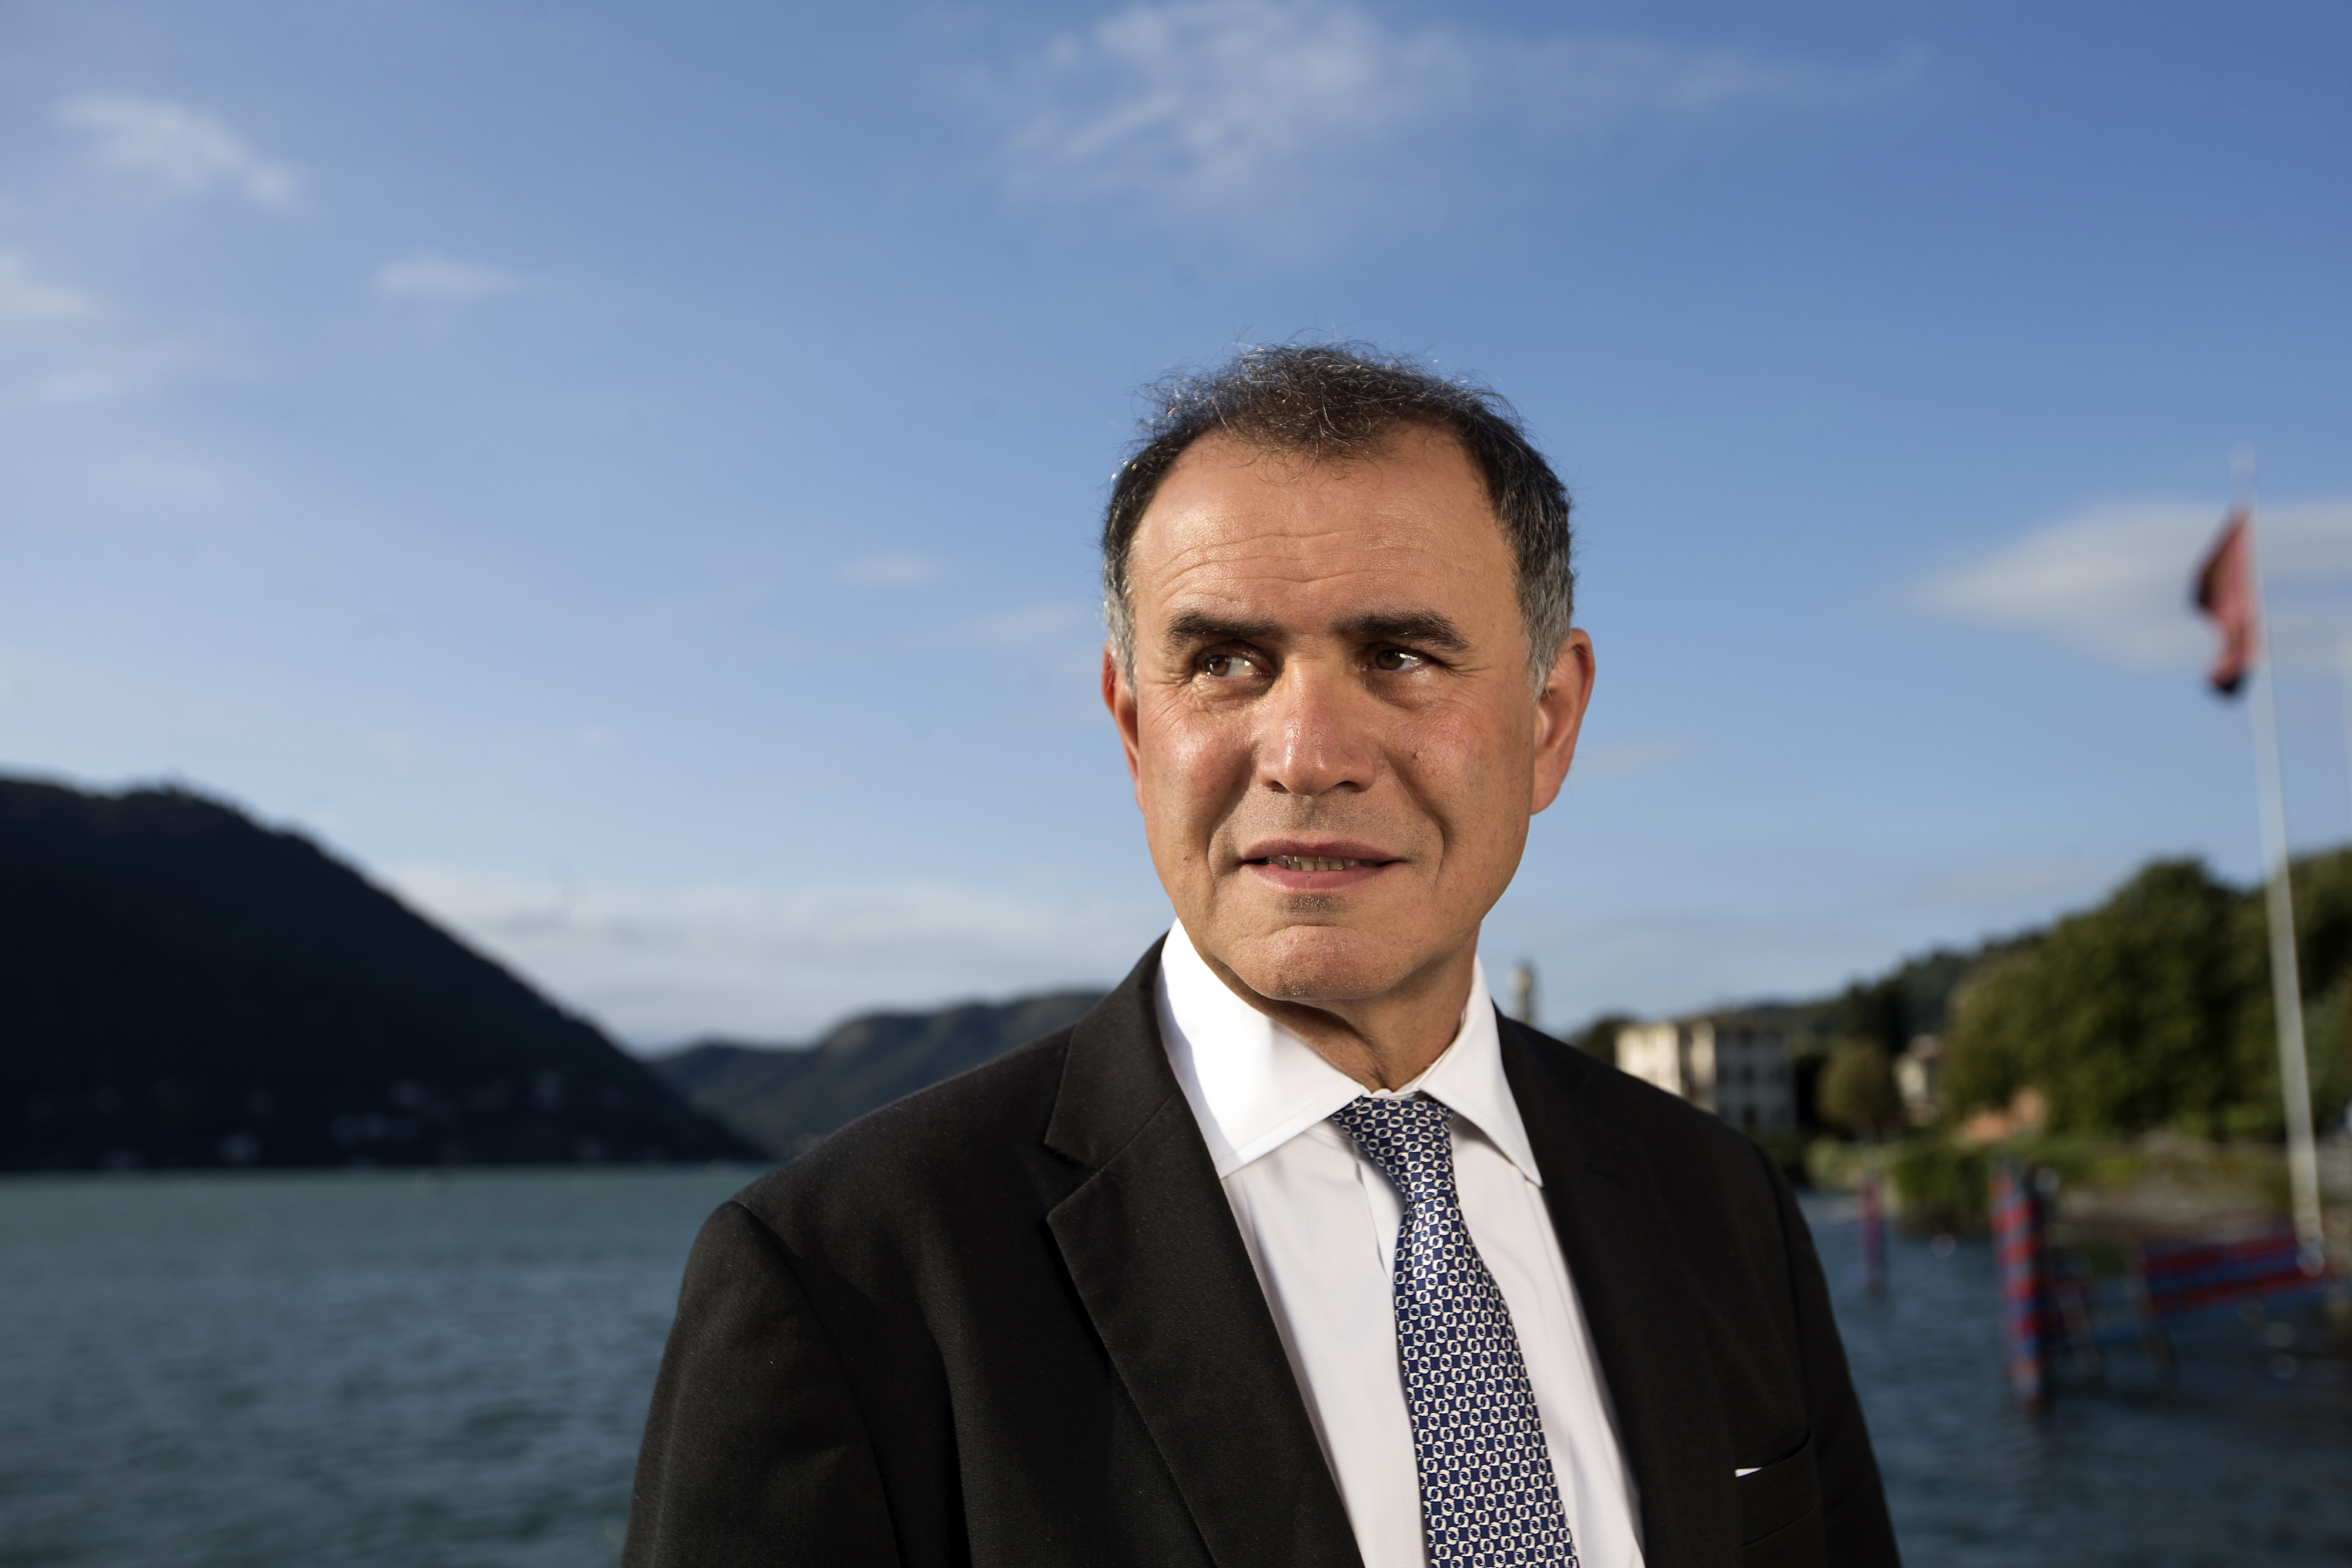 Nouriel Roubini, chairman of Roubini Global Economics, at the Ambrosetti Forum in Cernobbio, Italy, on Sept. 4, 2015.